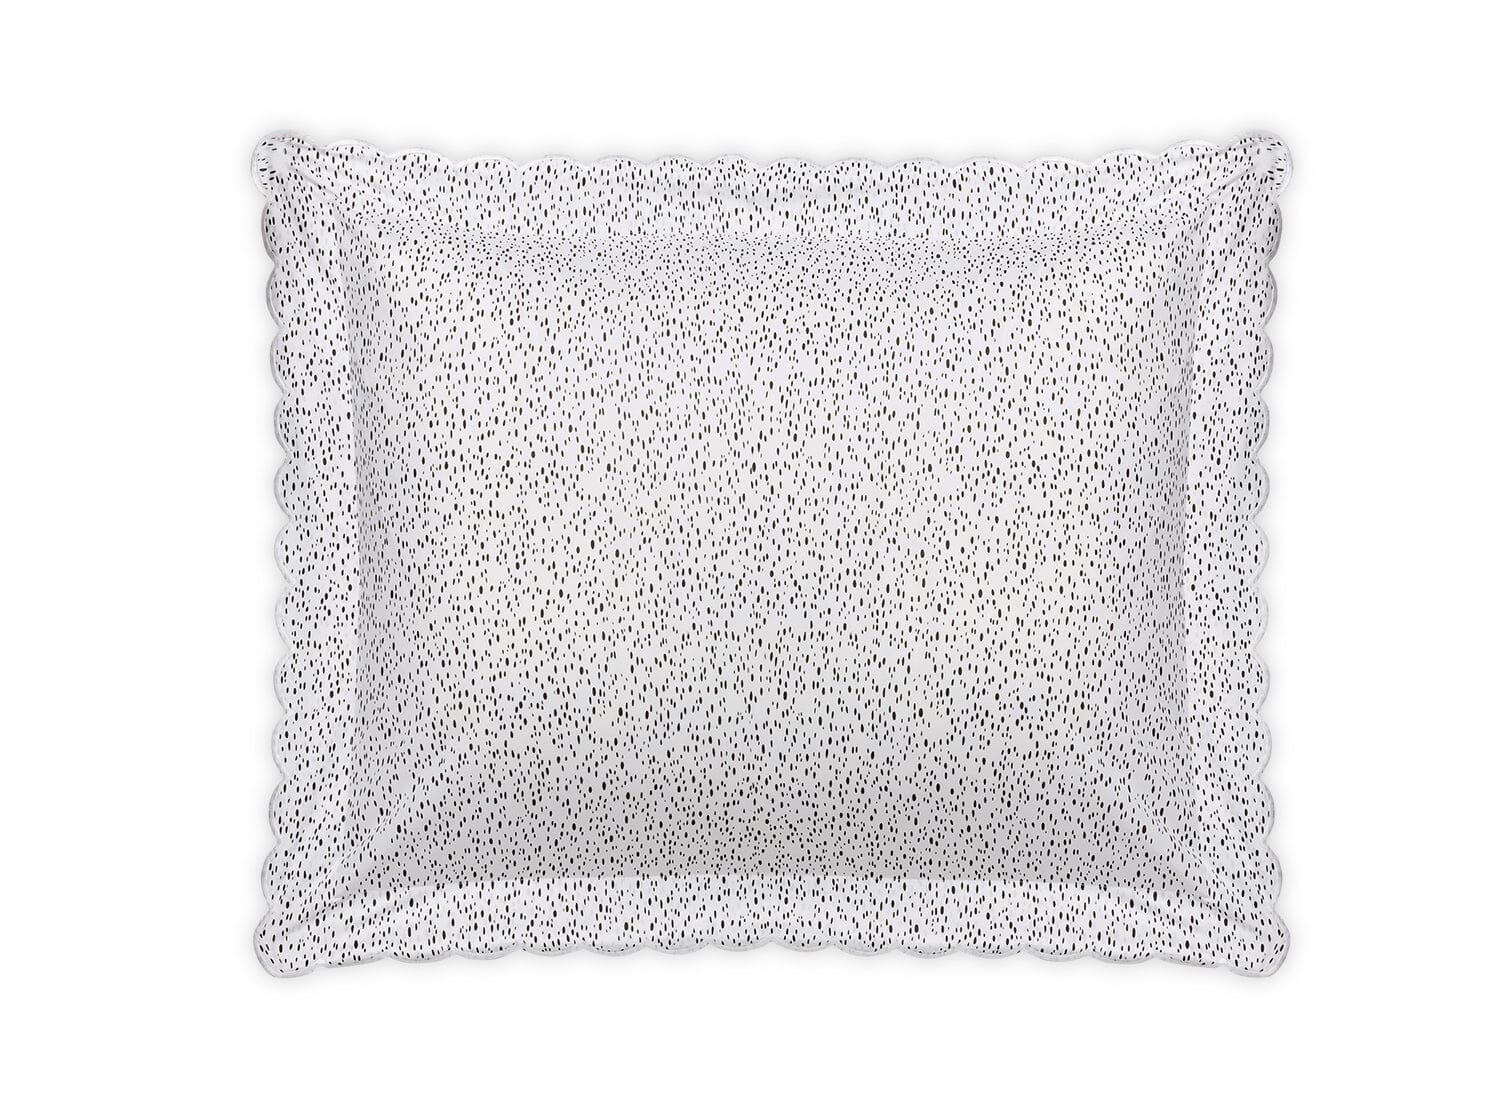 Pillow Sham - Celine Charcoal Bedding by Matouk Schumacher 